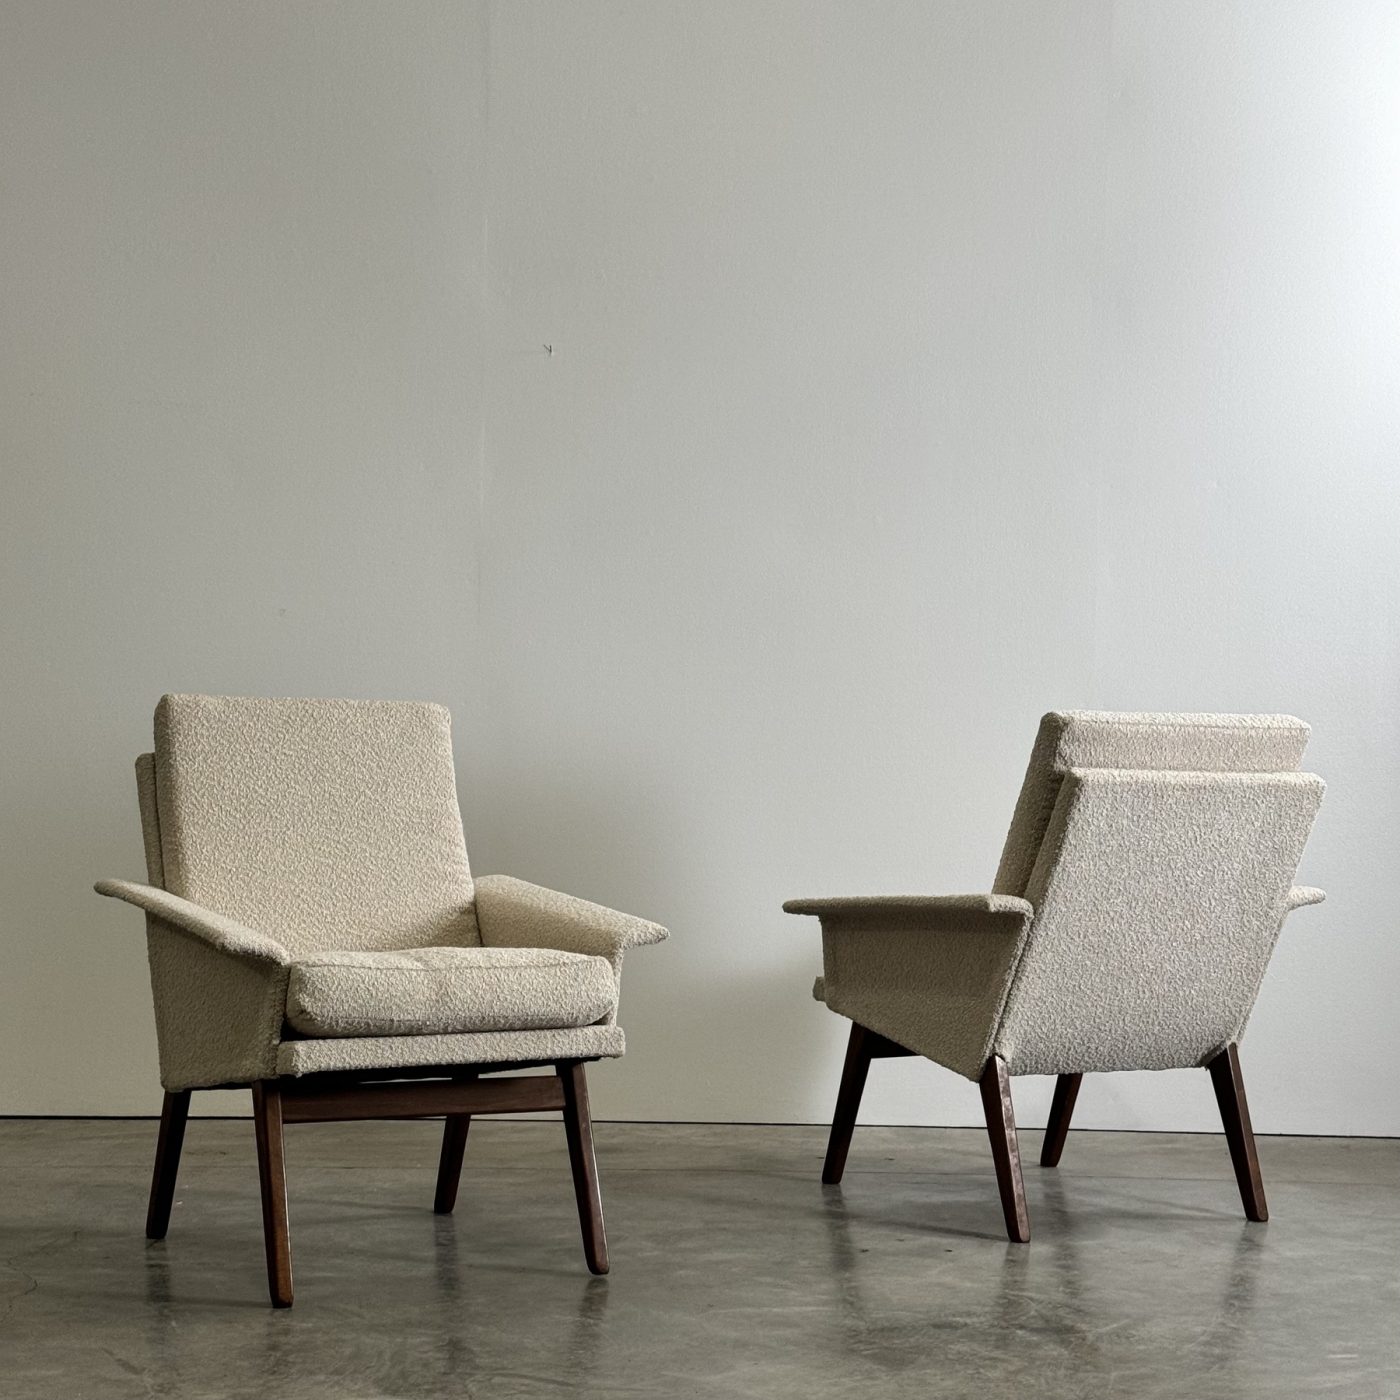 objet-vagabond-vintage-armchairs20004